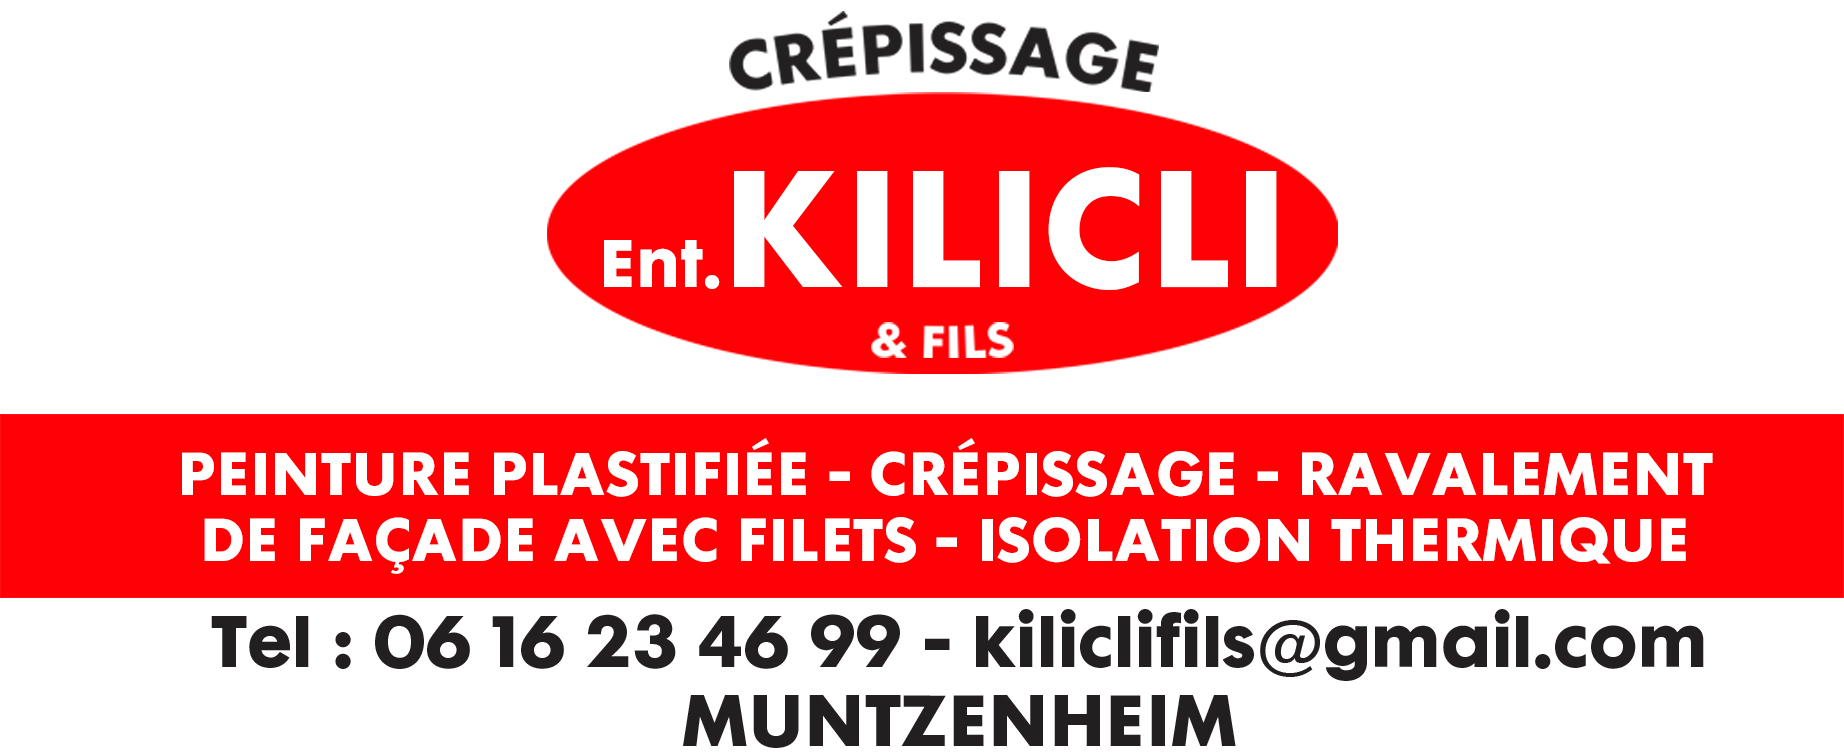 Kilicli Crépissage & Fils